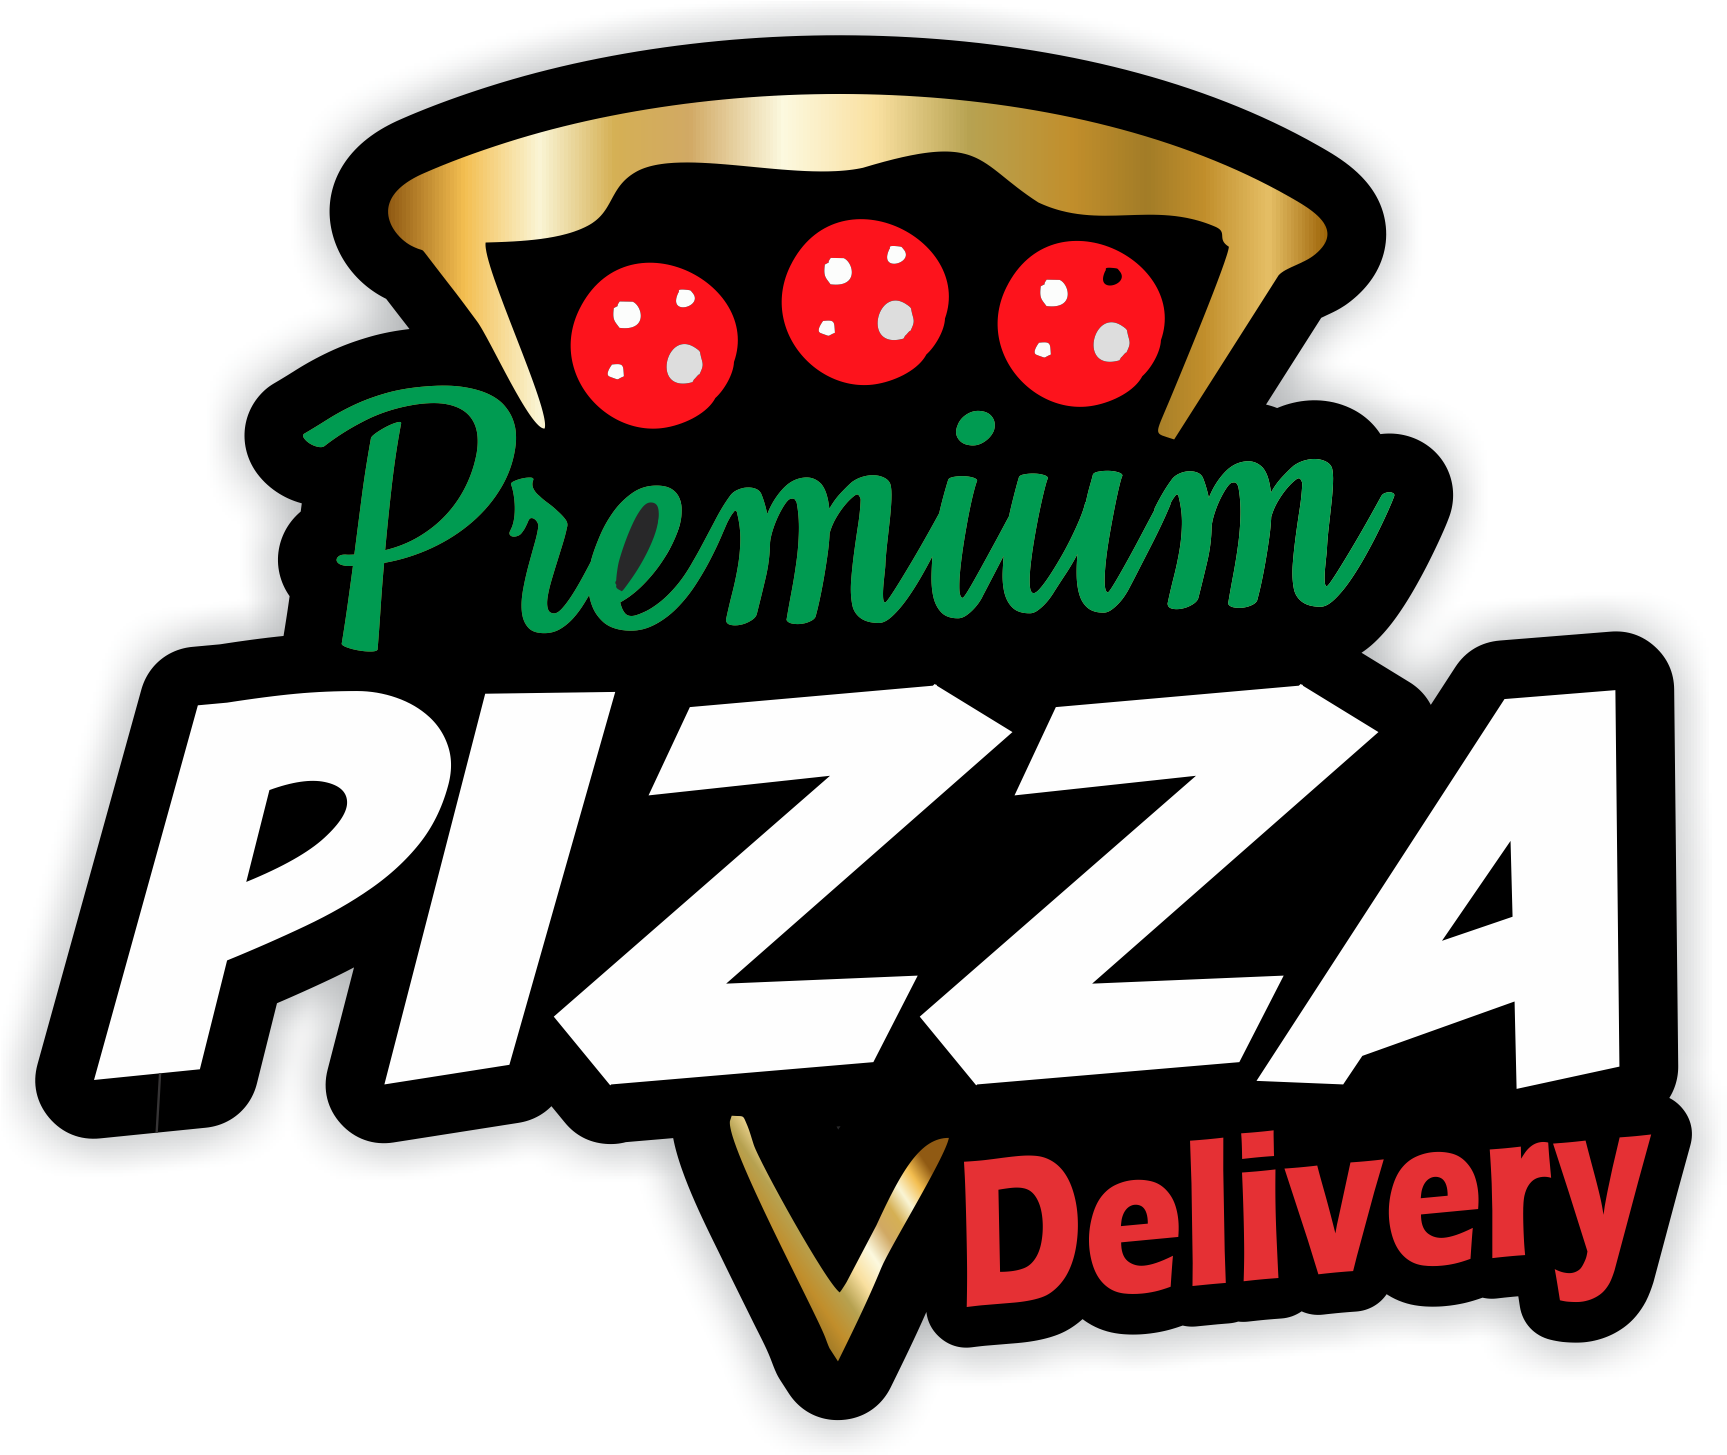 Pizza Premium - Pedido Online